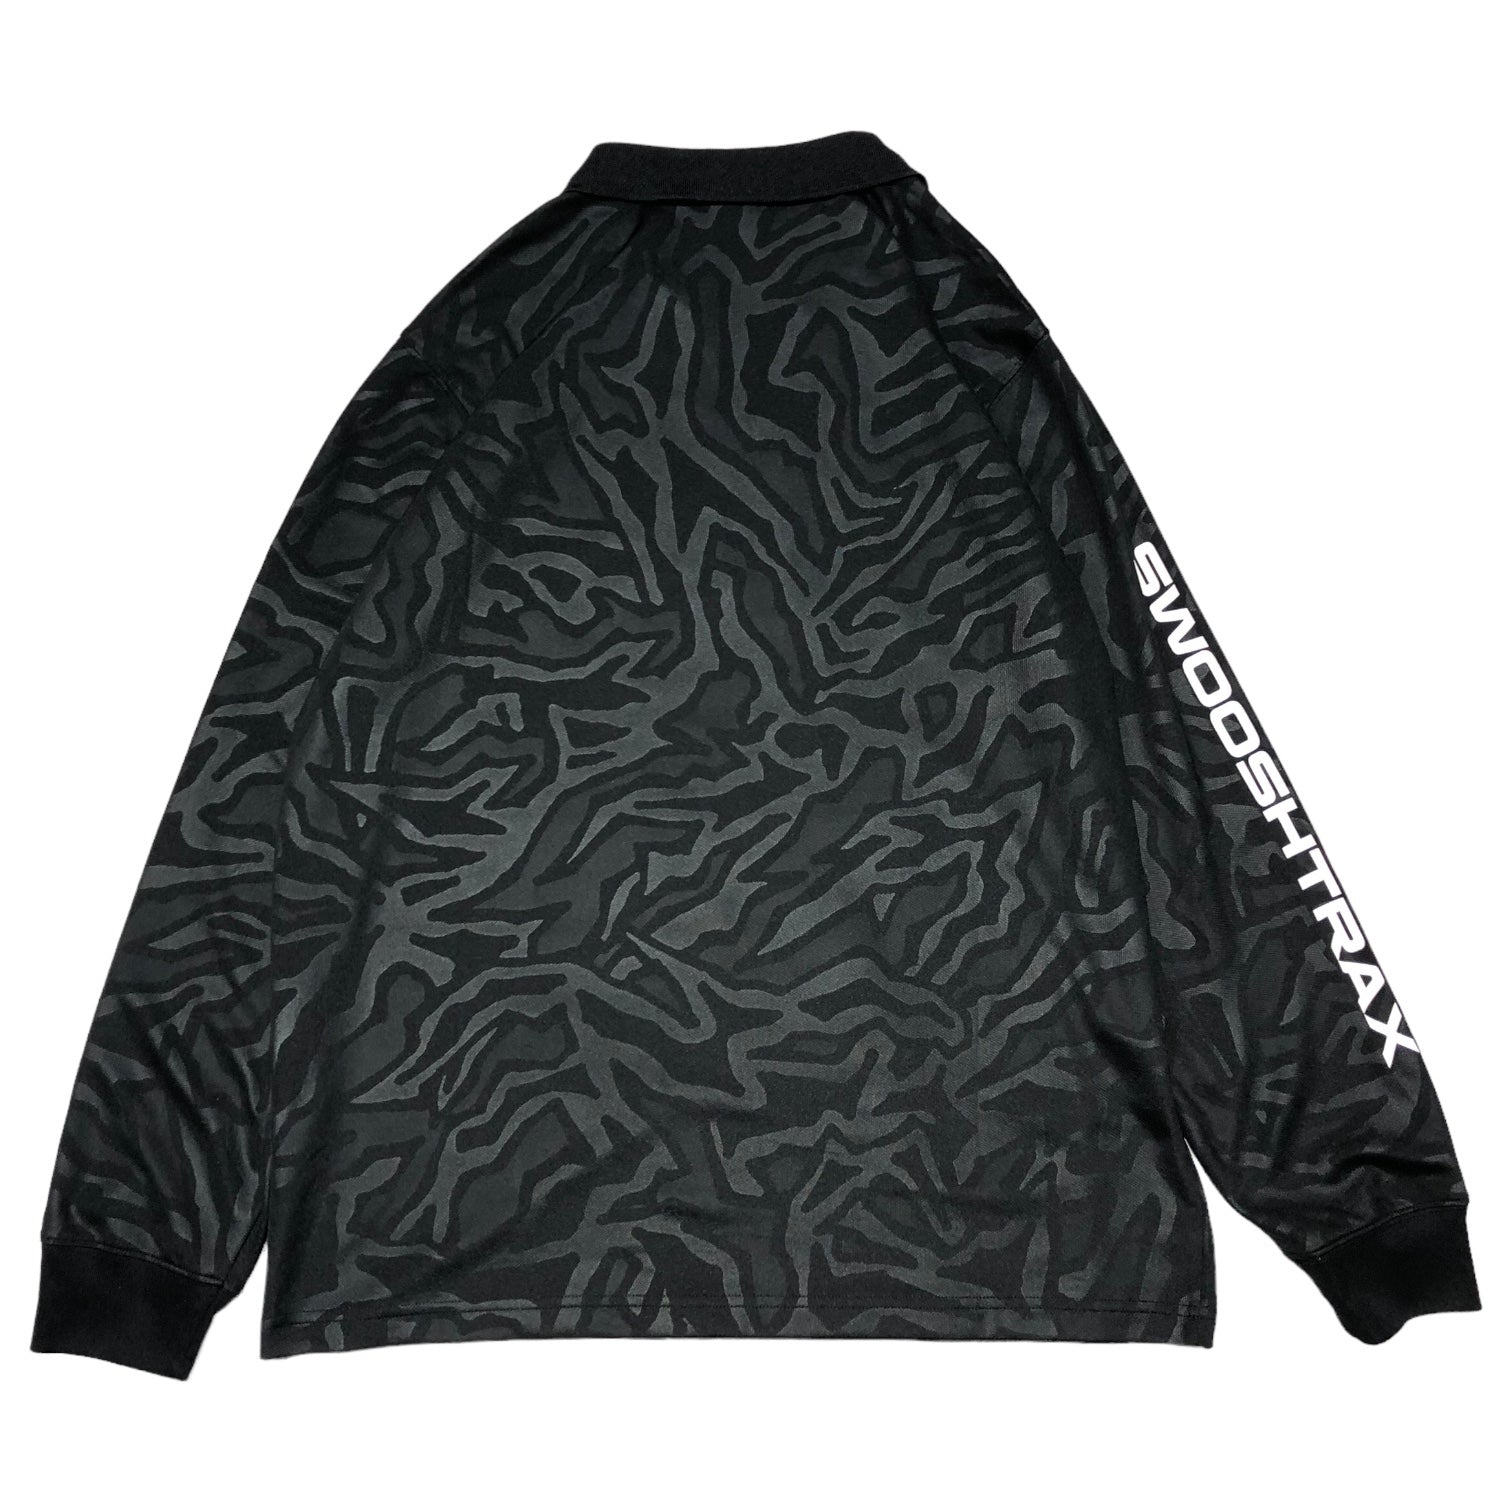 NIKE(ナイキ) Long-Sleeve Top ロックスリーブ トップ ゲームシャツ DX0050-010 L ブラック